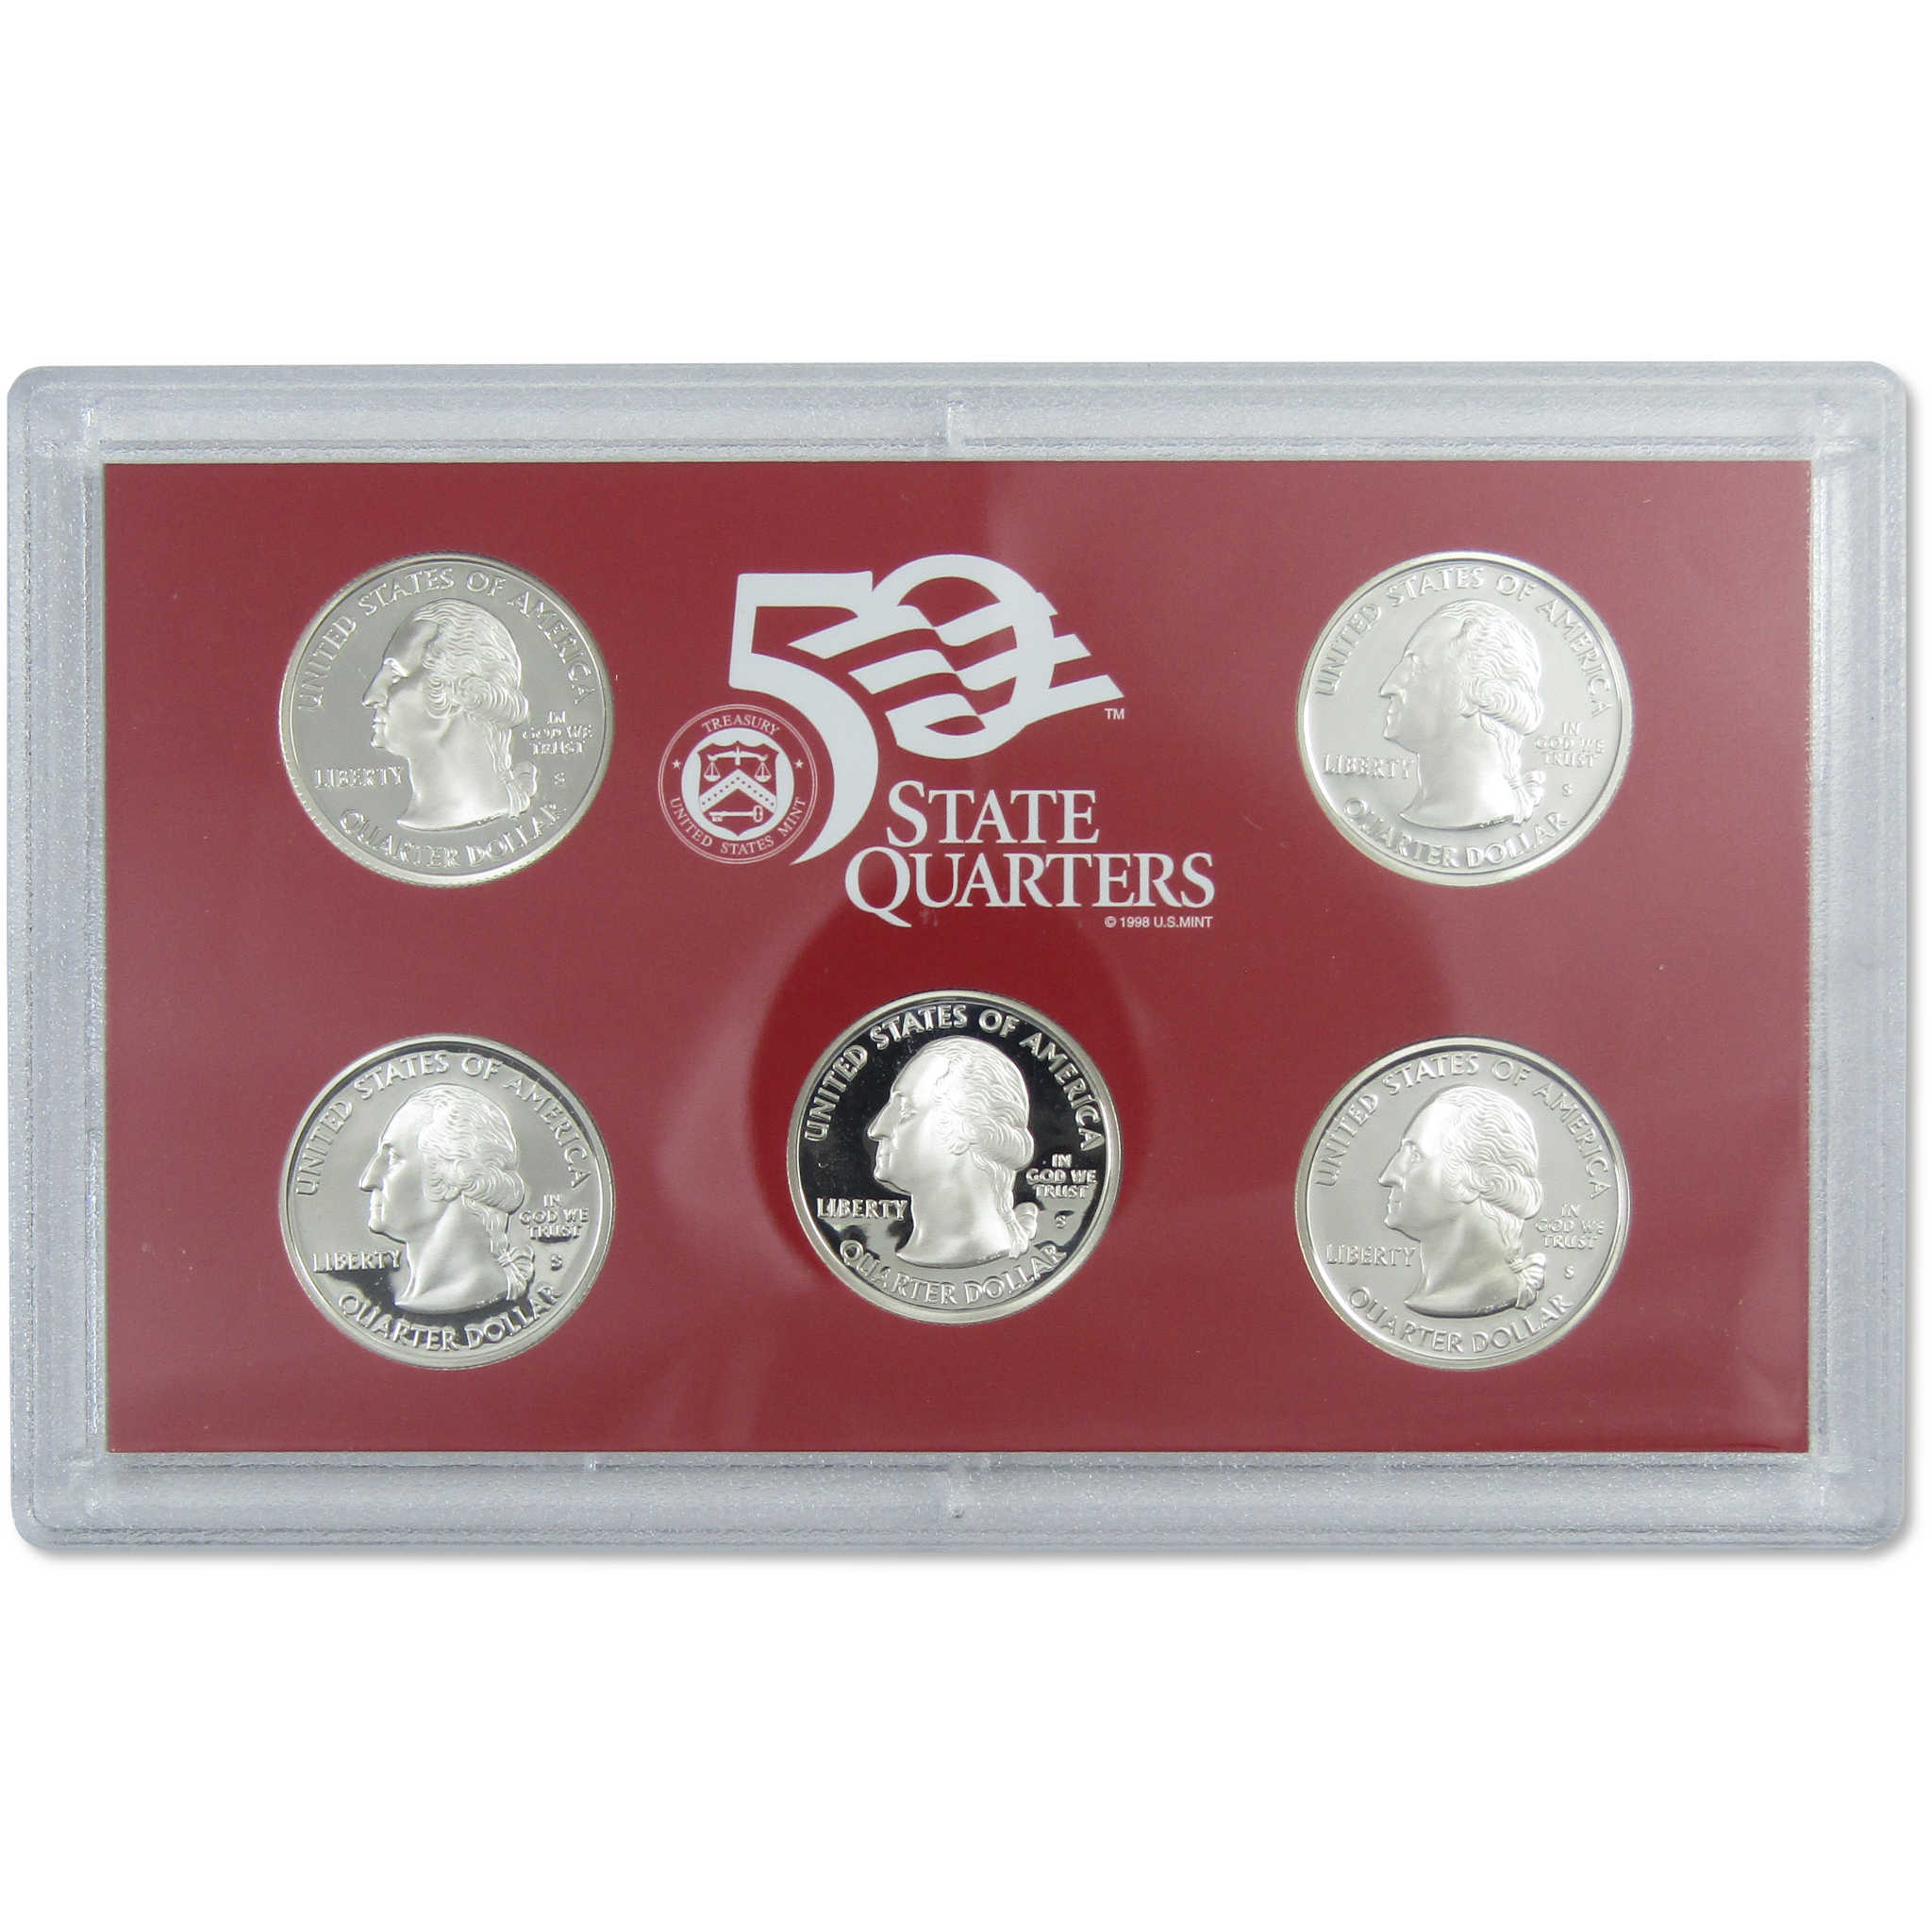 2007 Silver Proof Set U.S. Mint Original Government Packaging OGP COA